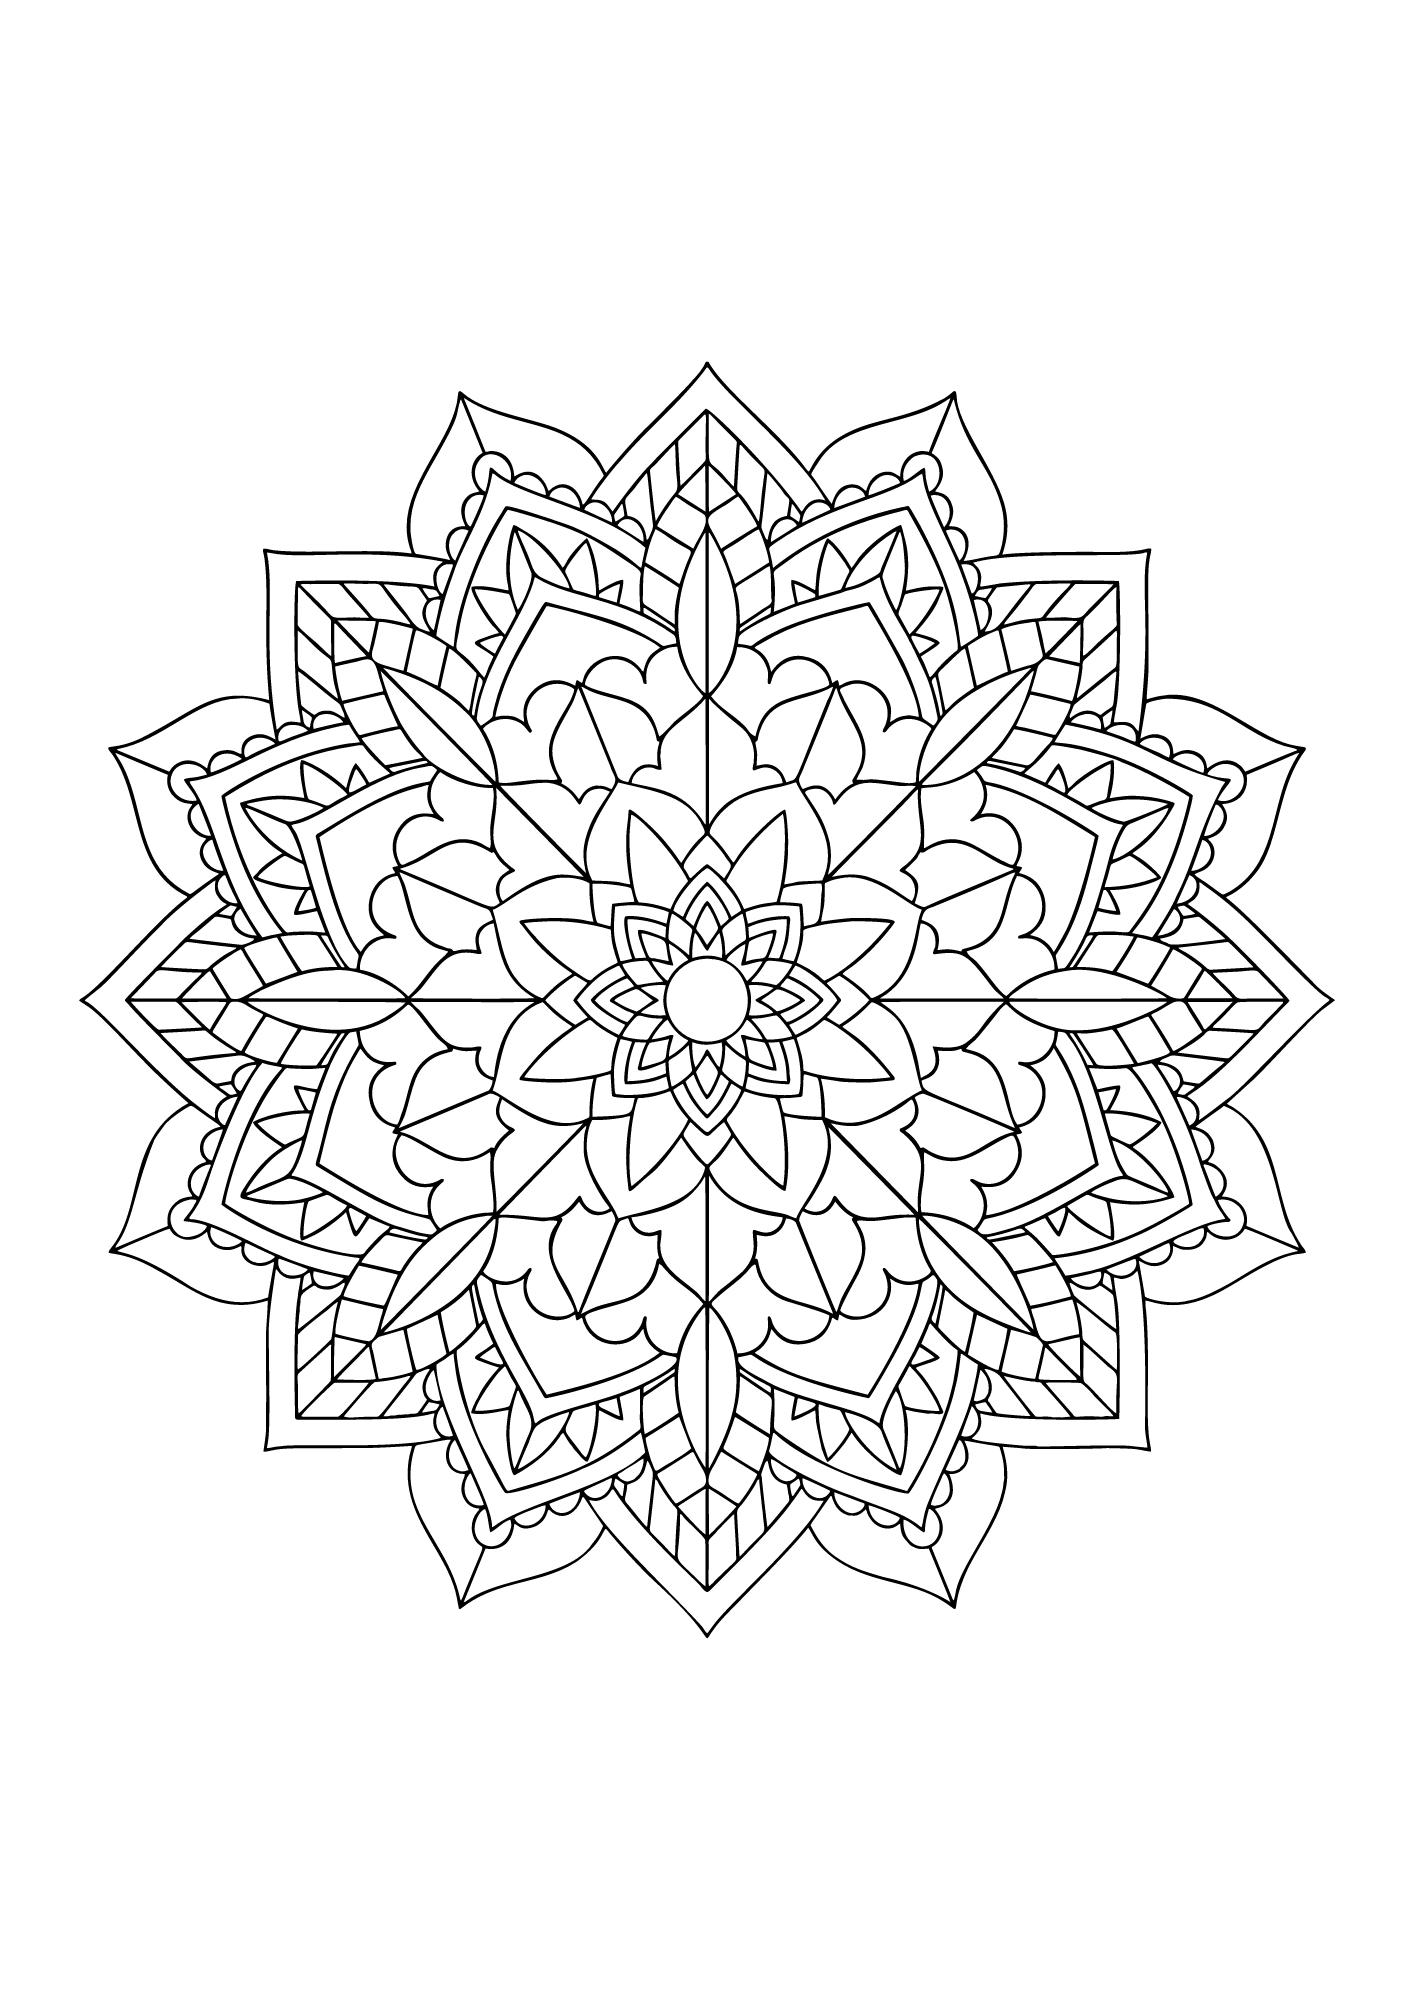 Flower-shaped Mandala to Print